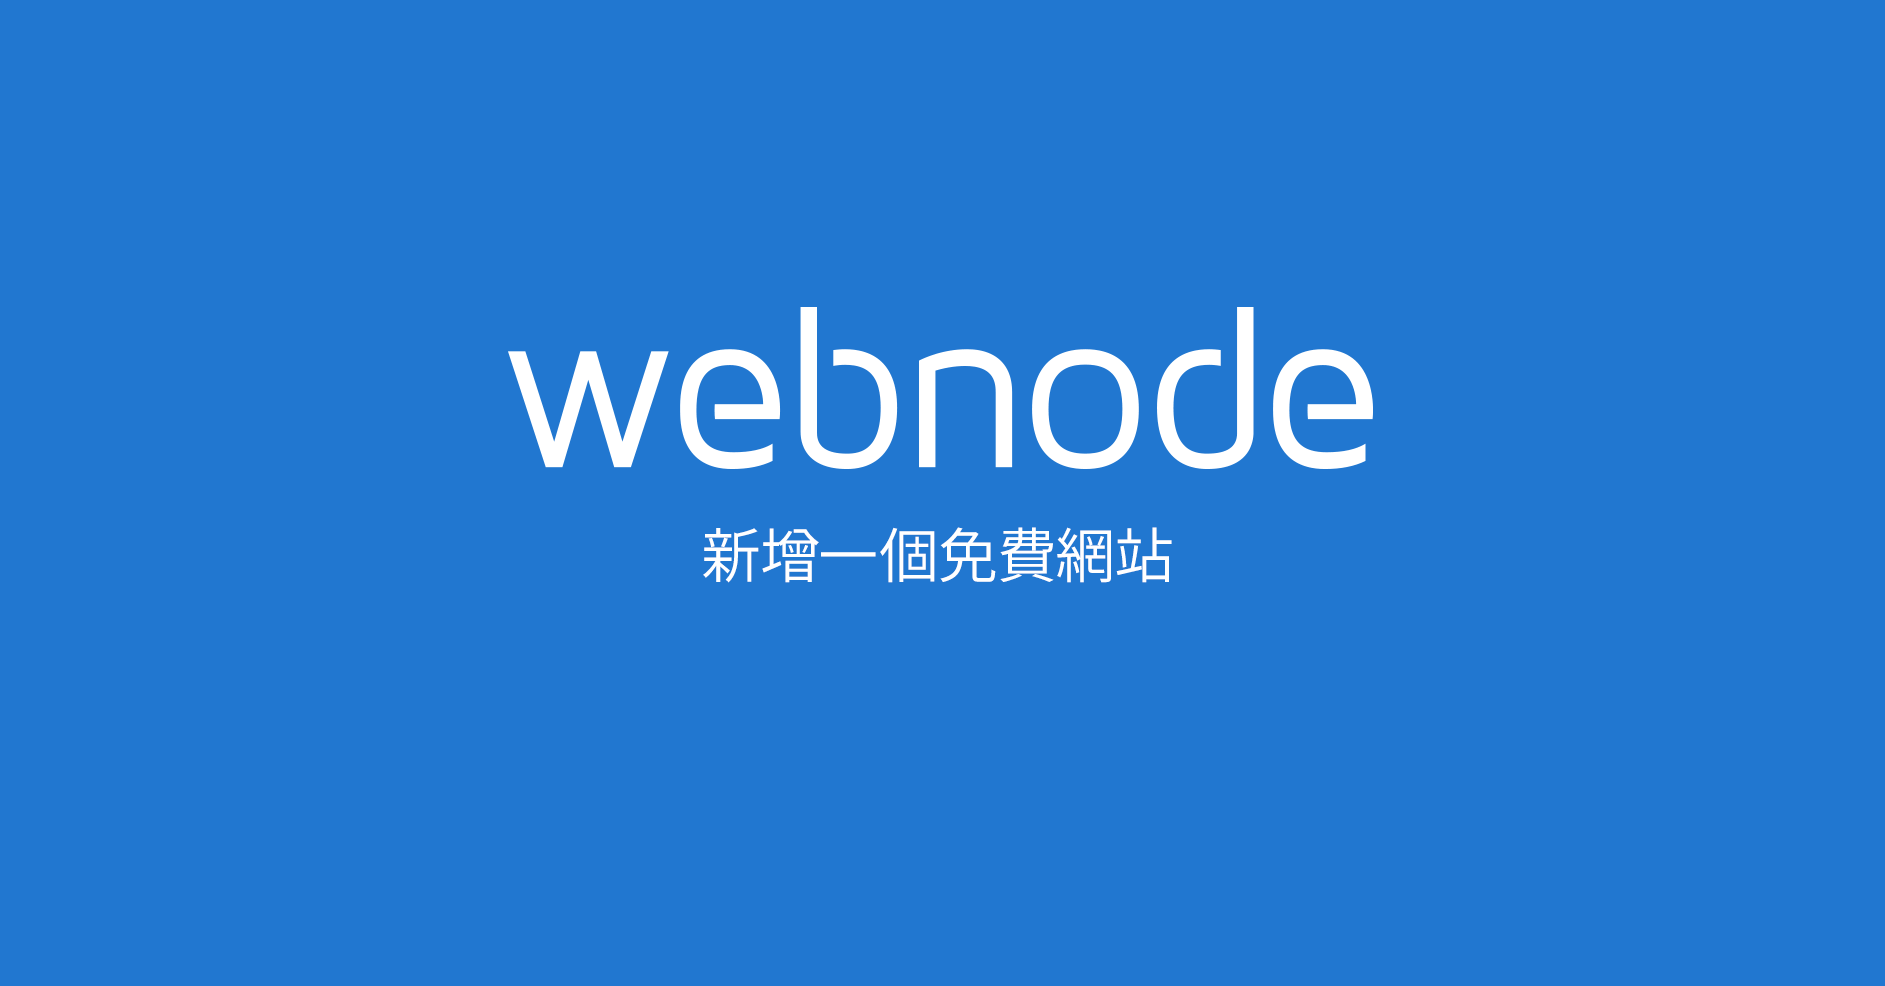 免費建立網站 - Webnode